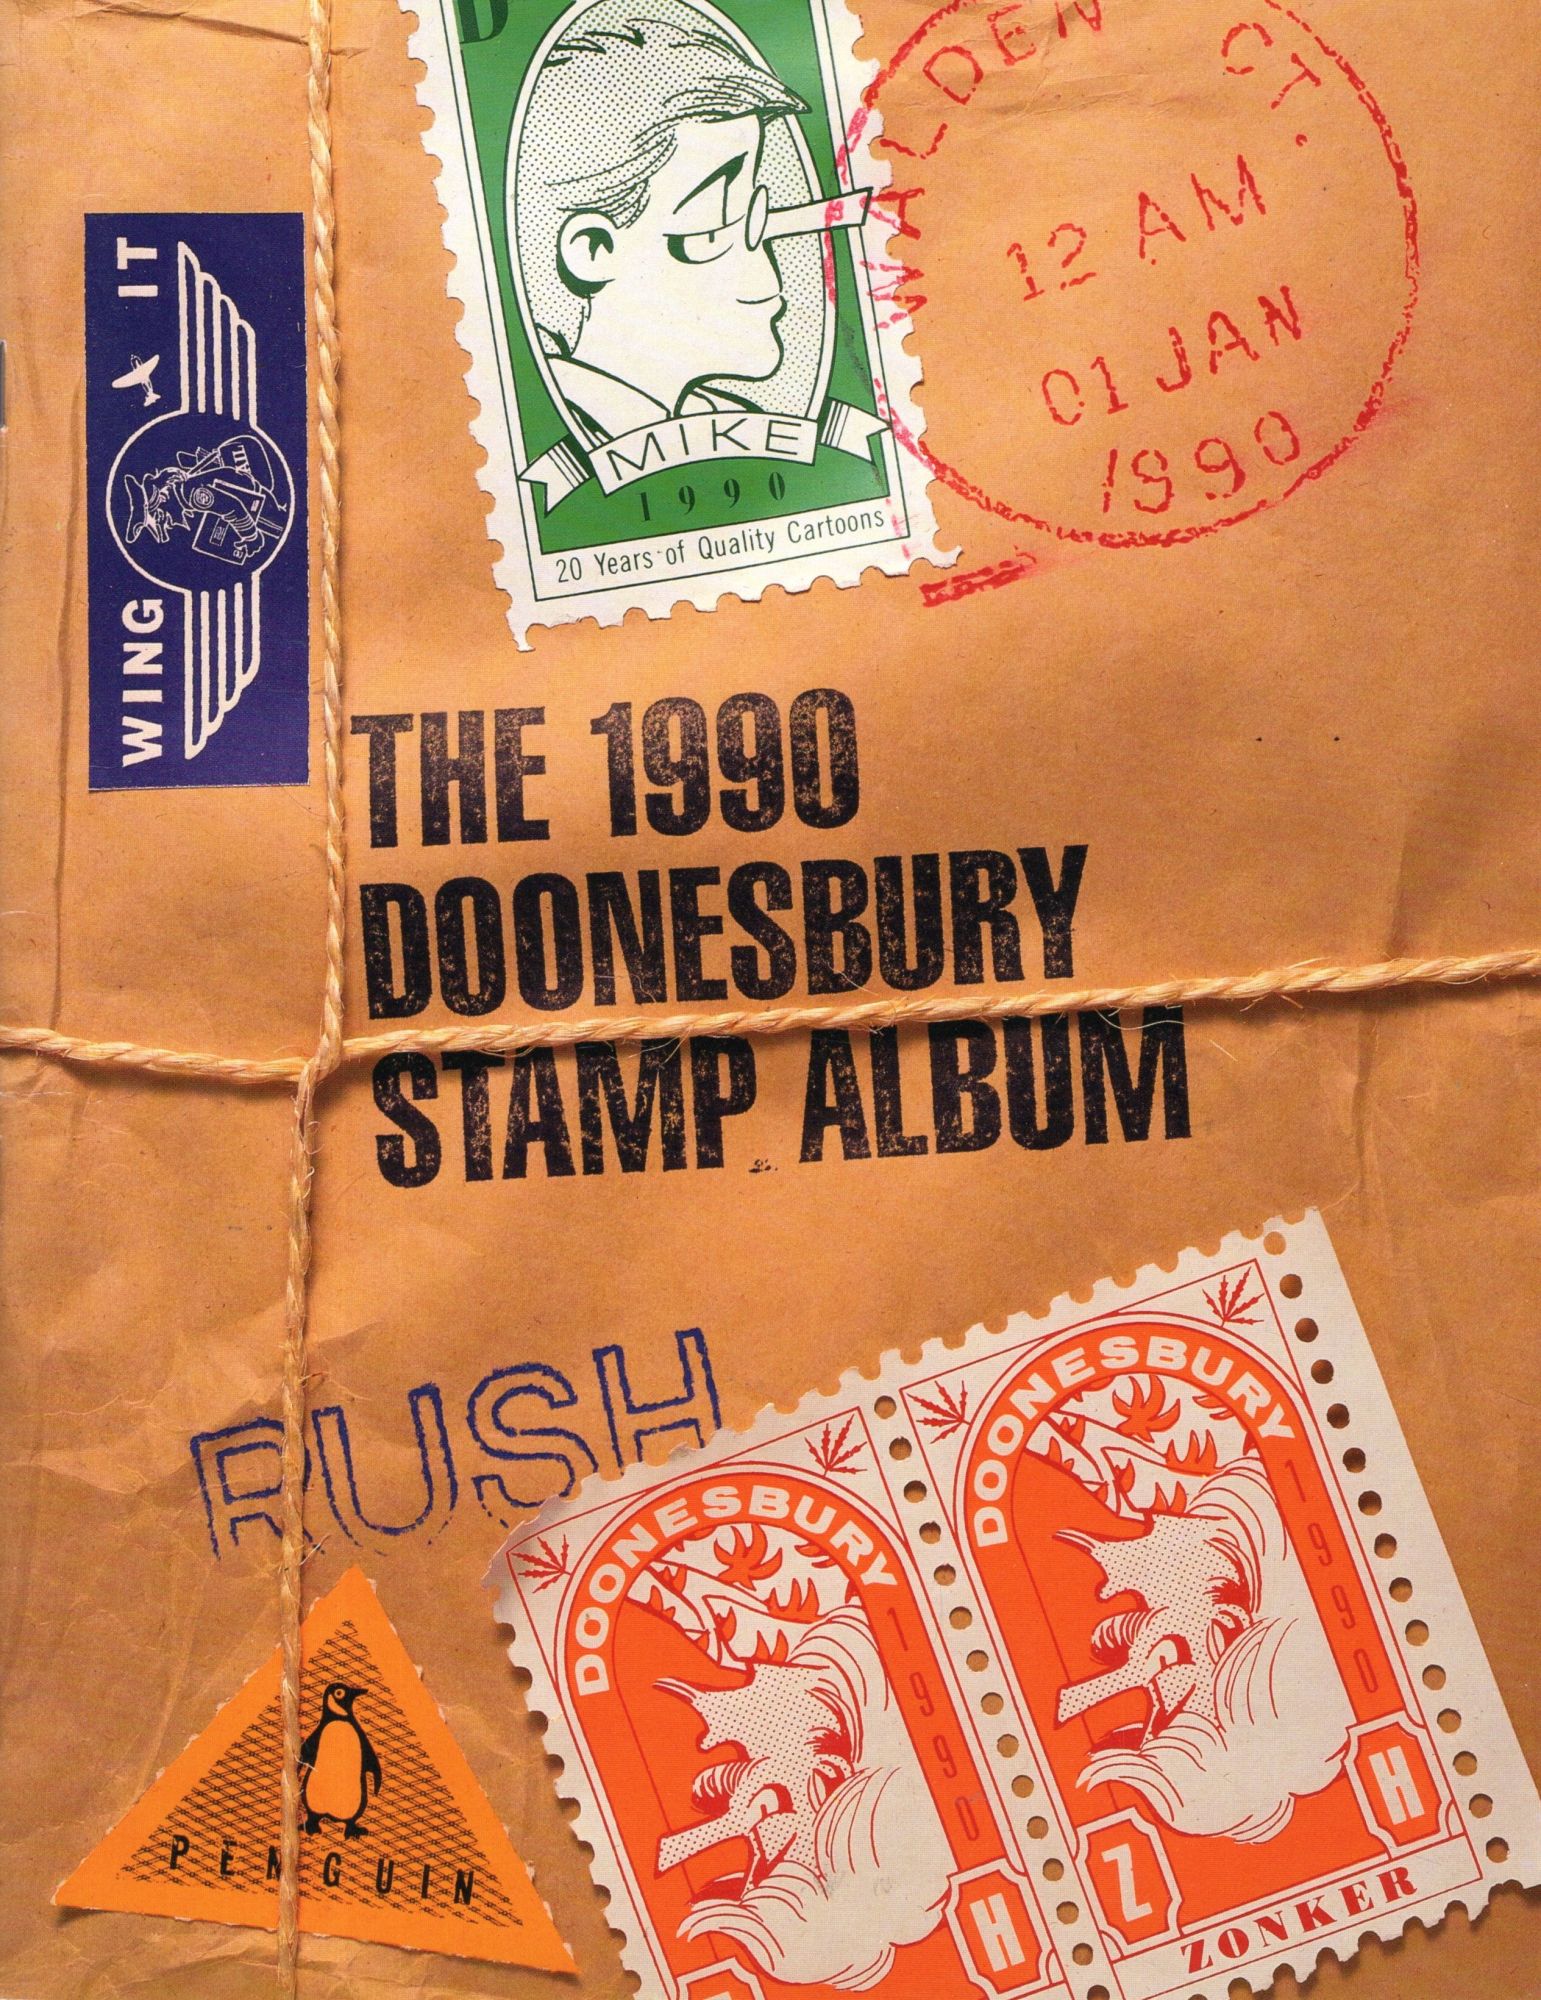 The 1990 Doonesbury Stamp Album